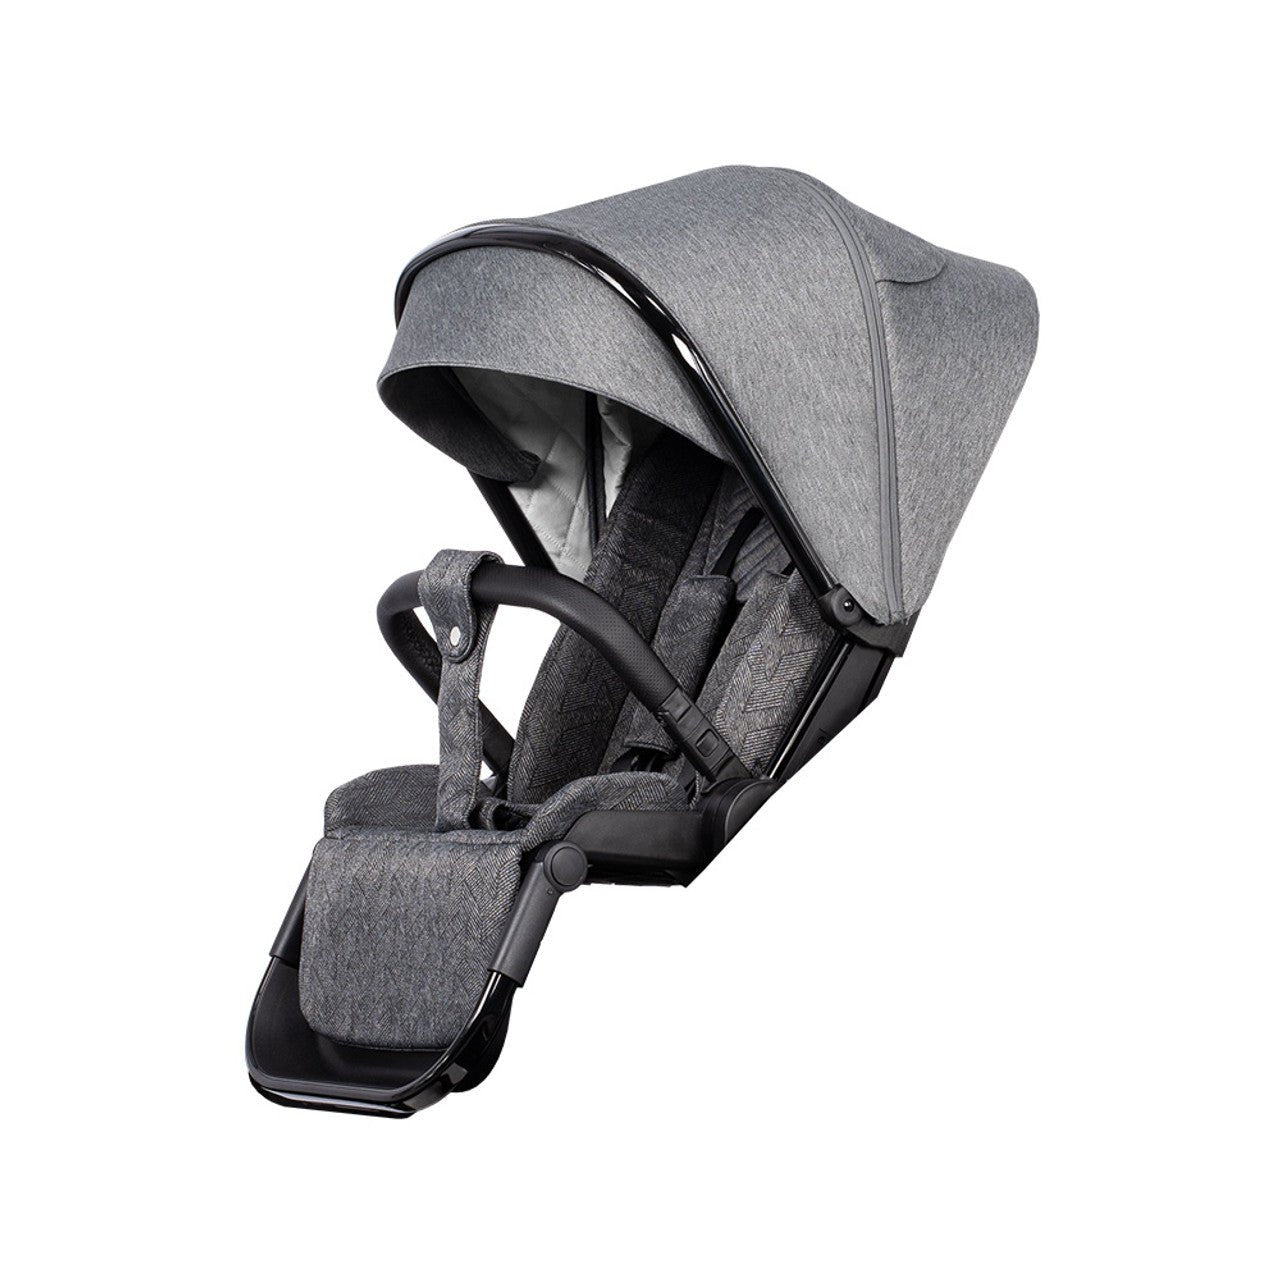 Venicci Upline Travel 3in1 Travel System -Slate Grey - Bundle Baby